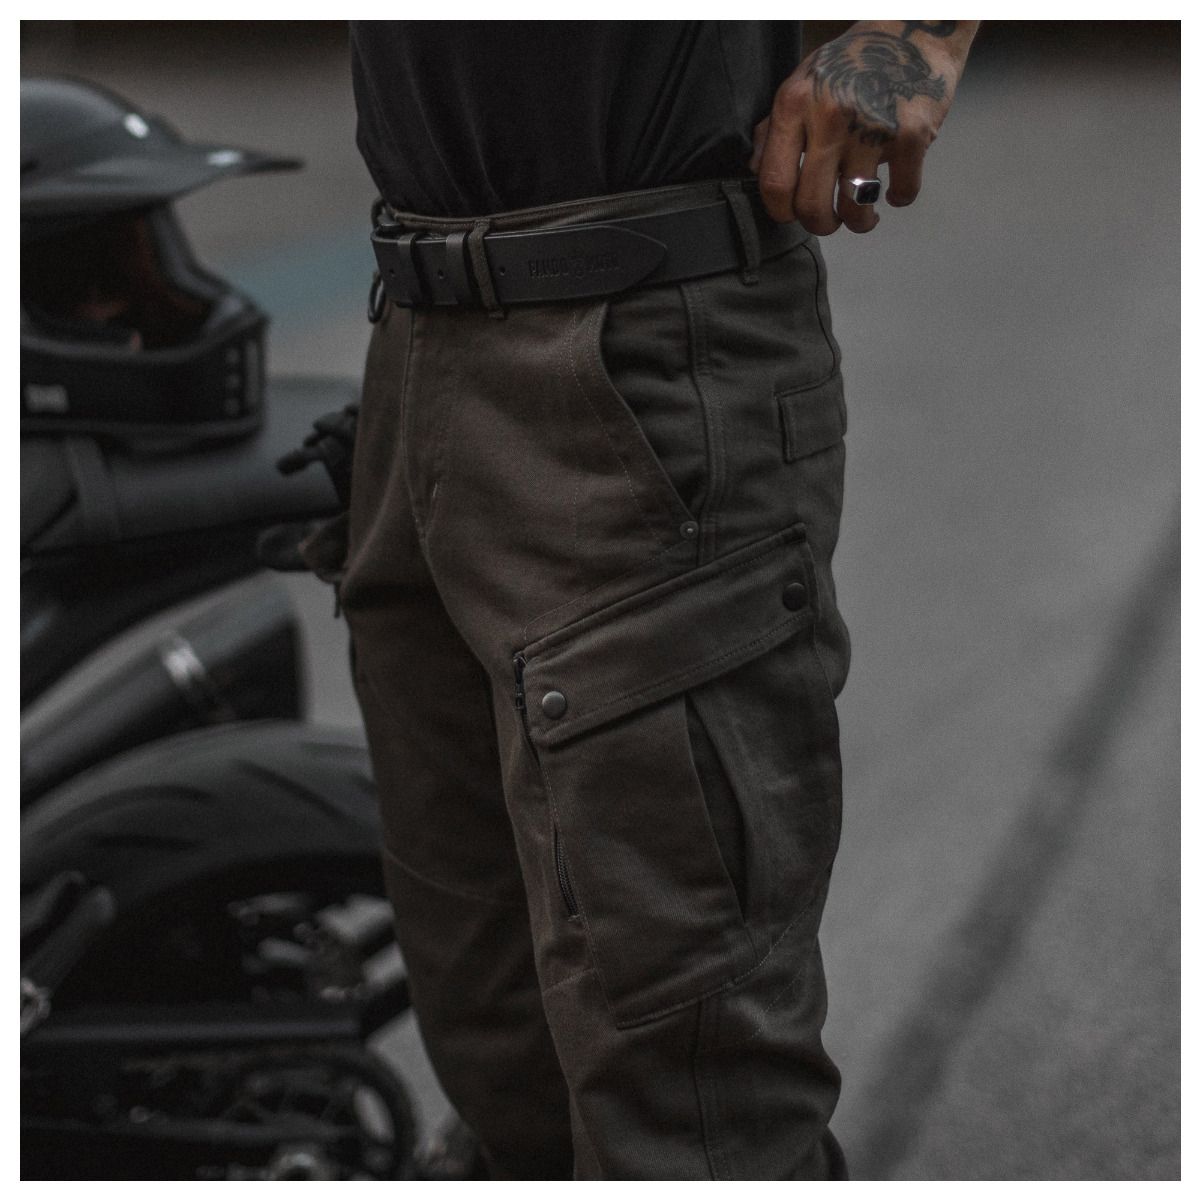 Pando Moto Mark Kev 02 Jeans, Length 32 - Olive Green